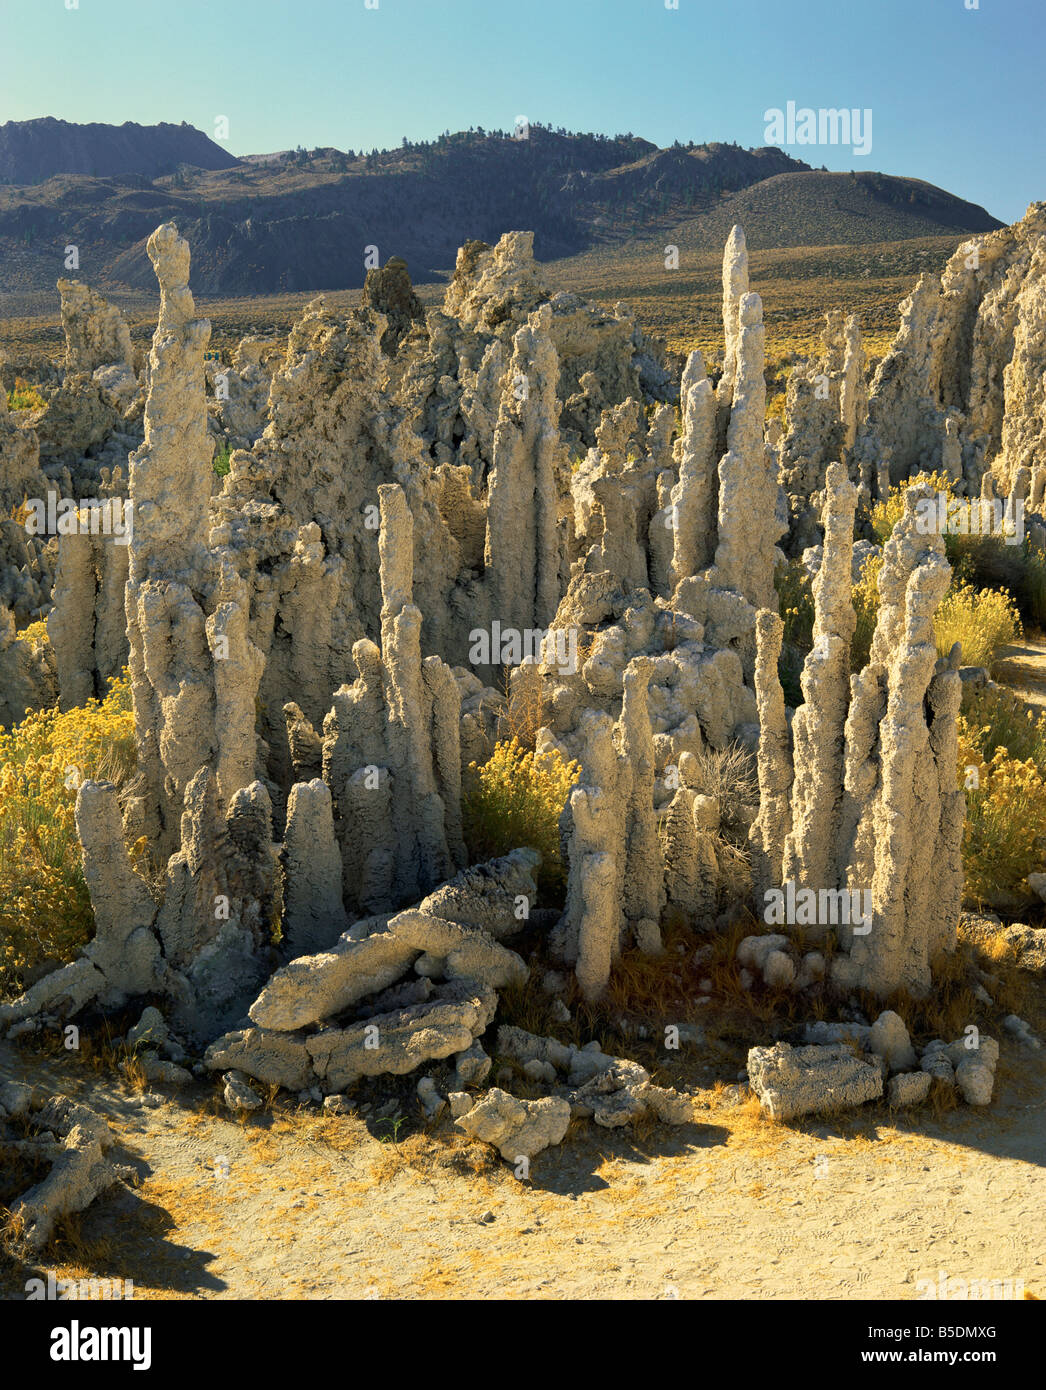 Tufas of calcium carbonate Mono Lake Tufa State Reserve California United States of America North America Stock Photo